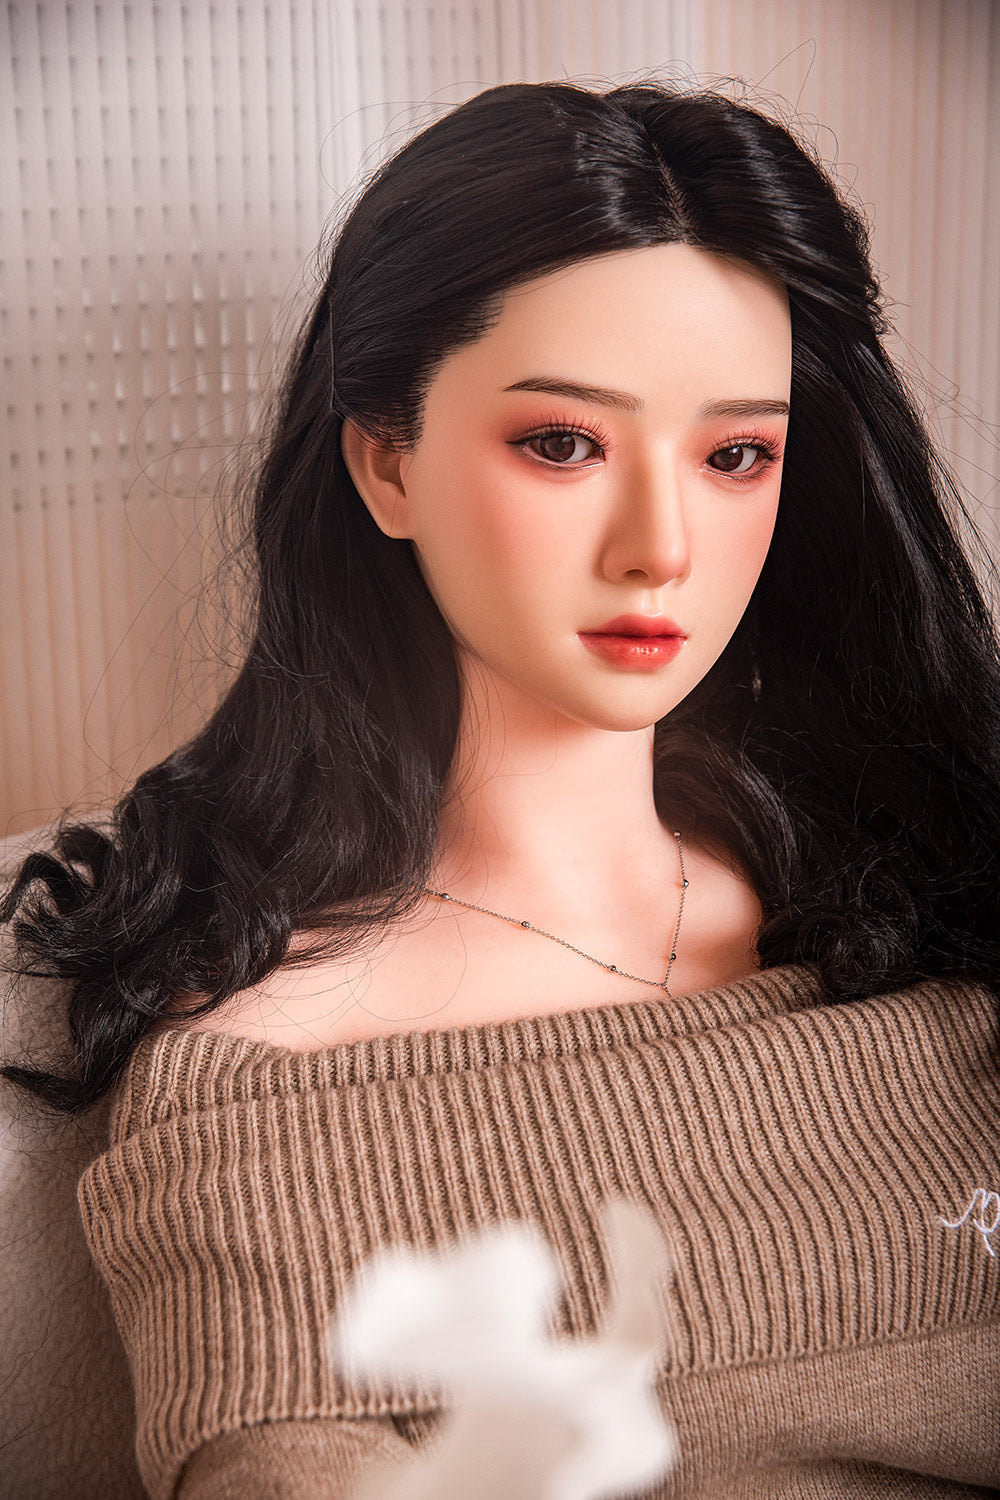 US Stock - RIDMII 163cm Unique Design Muncey Asian Medium Boobs App-Controleld Sex Doll Silicone Head TPE Body Love Doll